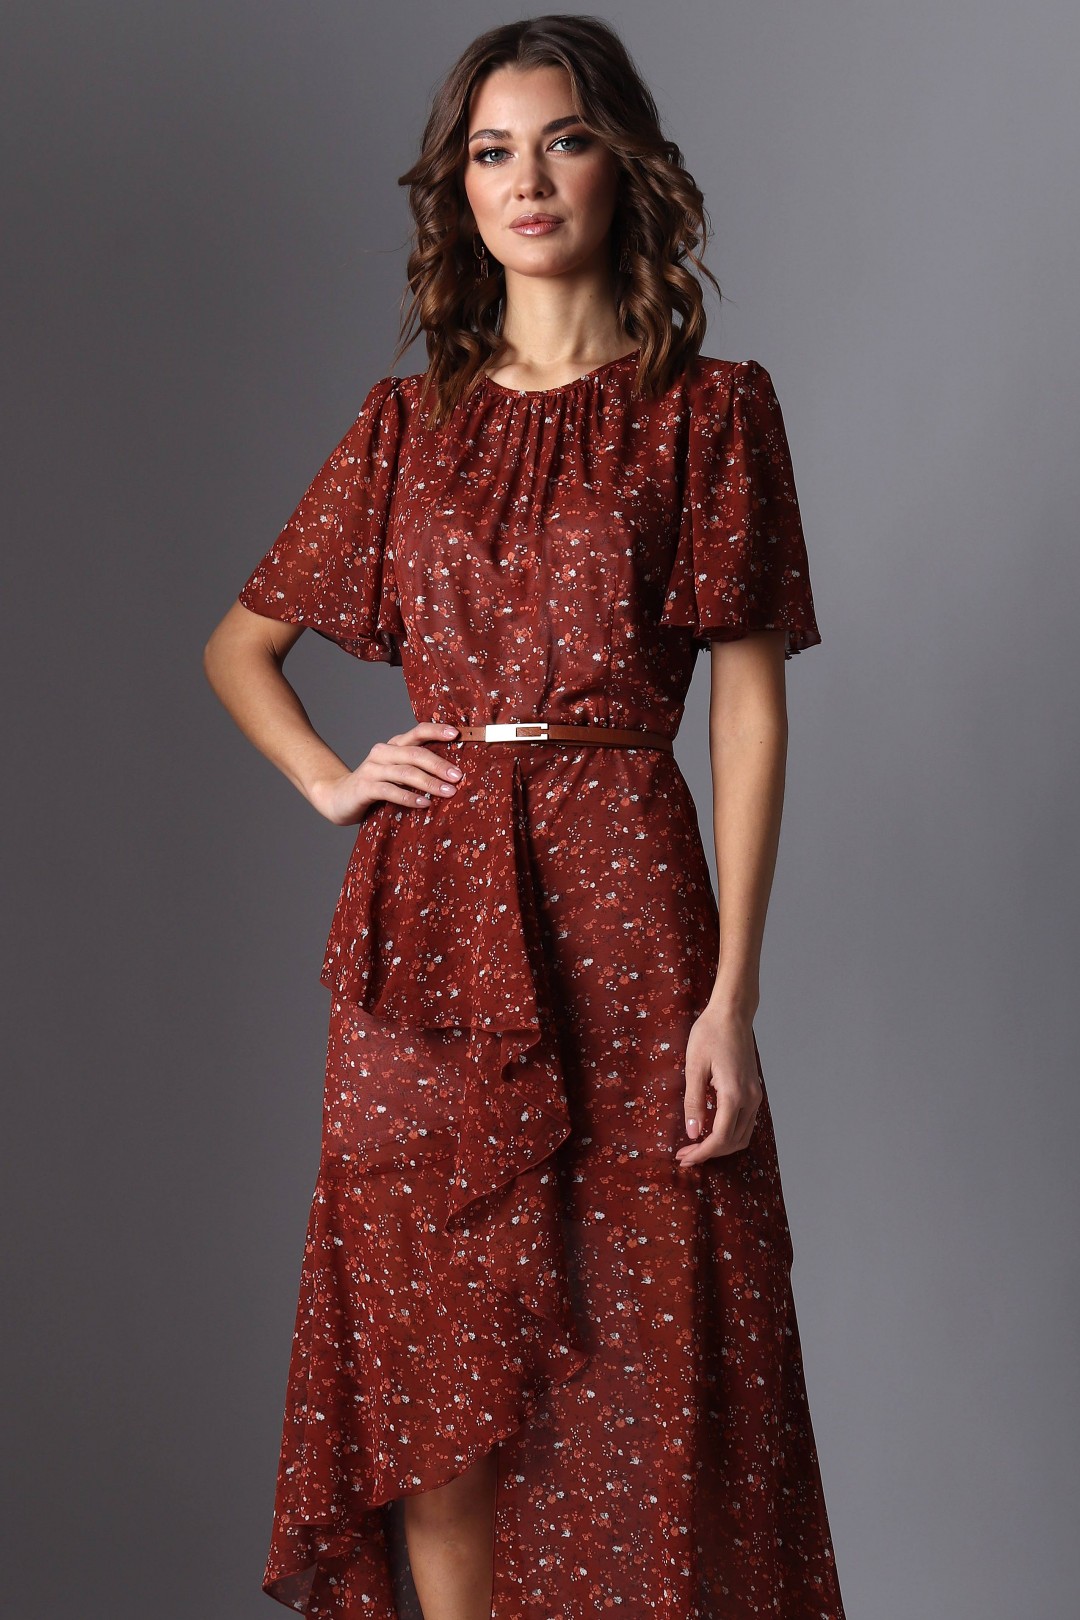 Платье МиА-Мода 1151-3